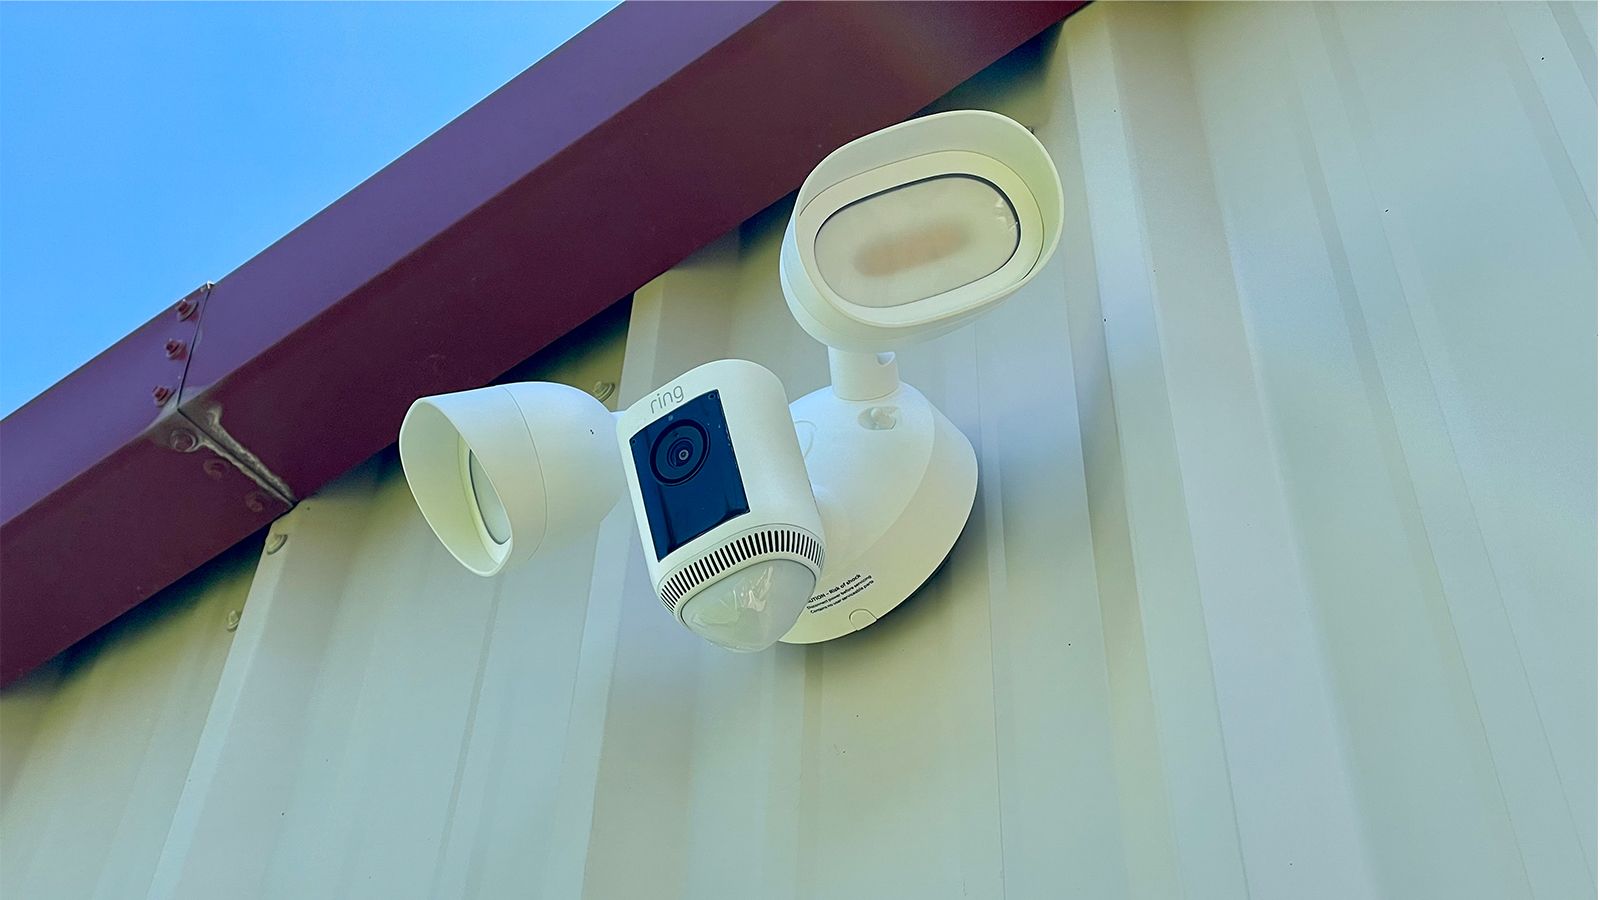 Ring Spotlight Cam Pro Review: Bright light, smart detection